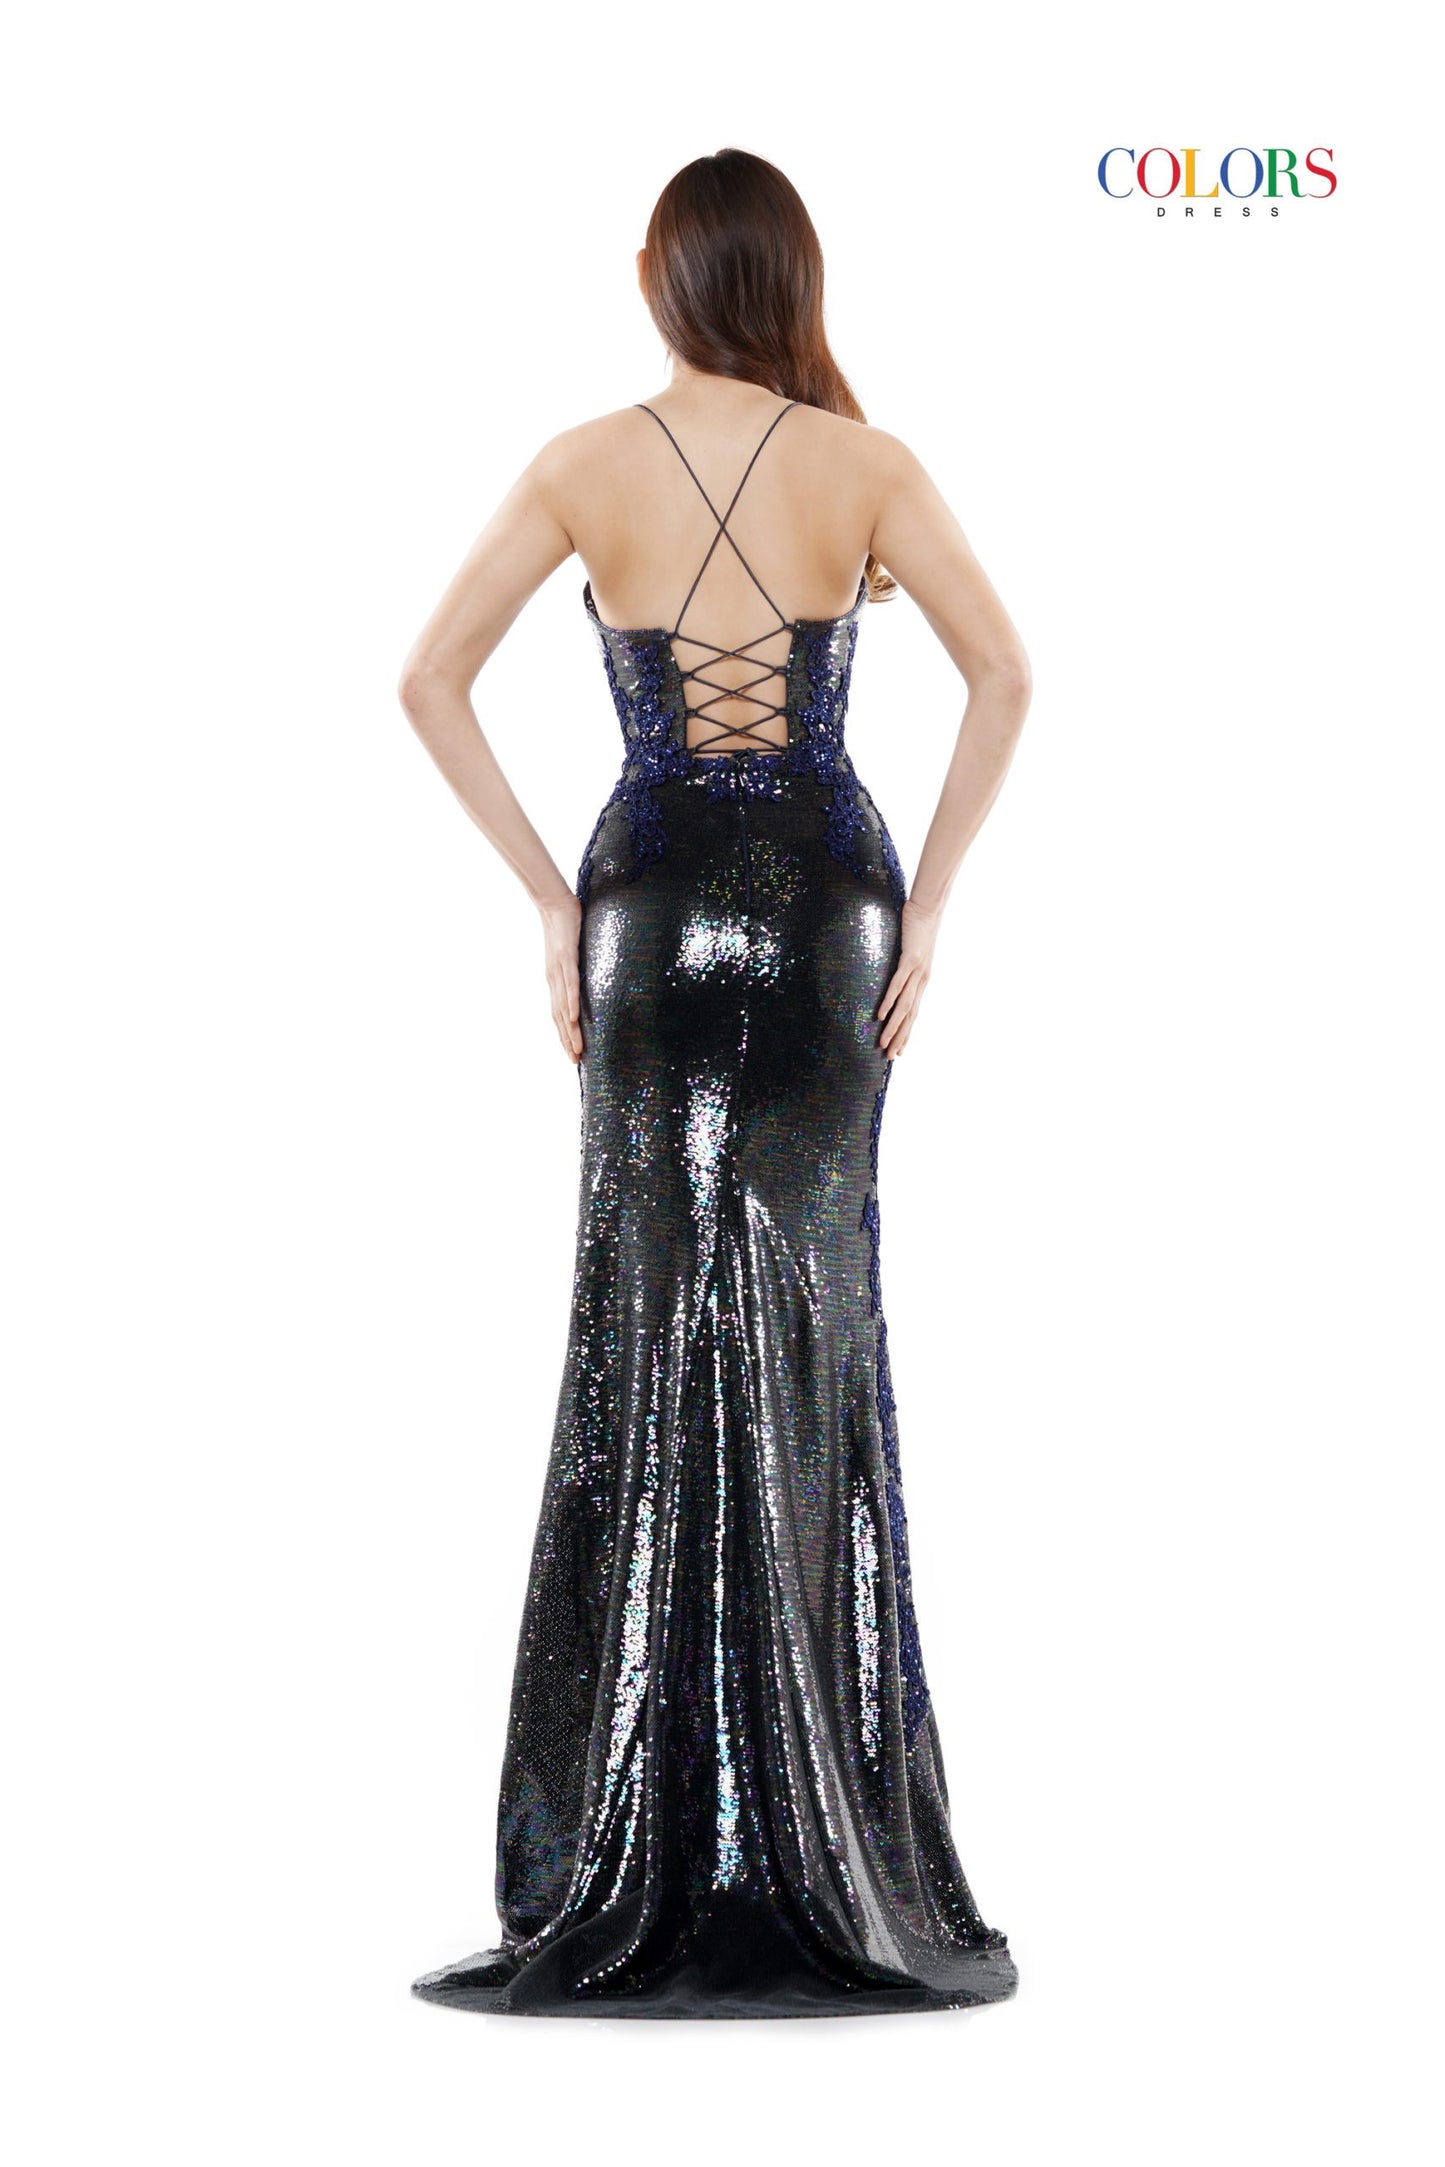 Colors 2519 Size 8 Long Sequin Lace Backless Corset Formal Dress Prom Pageant Plus Size